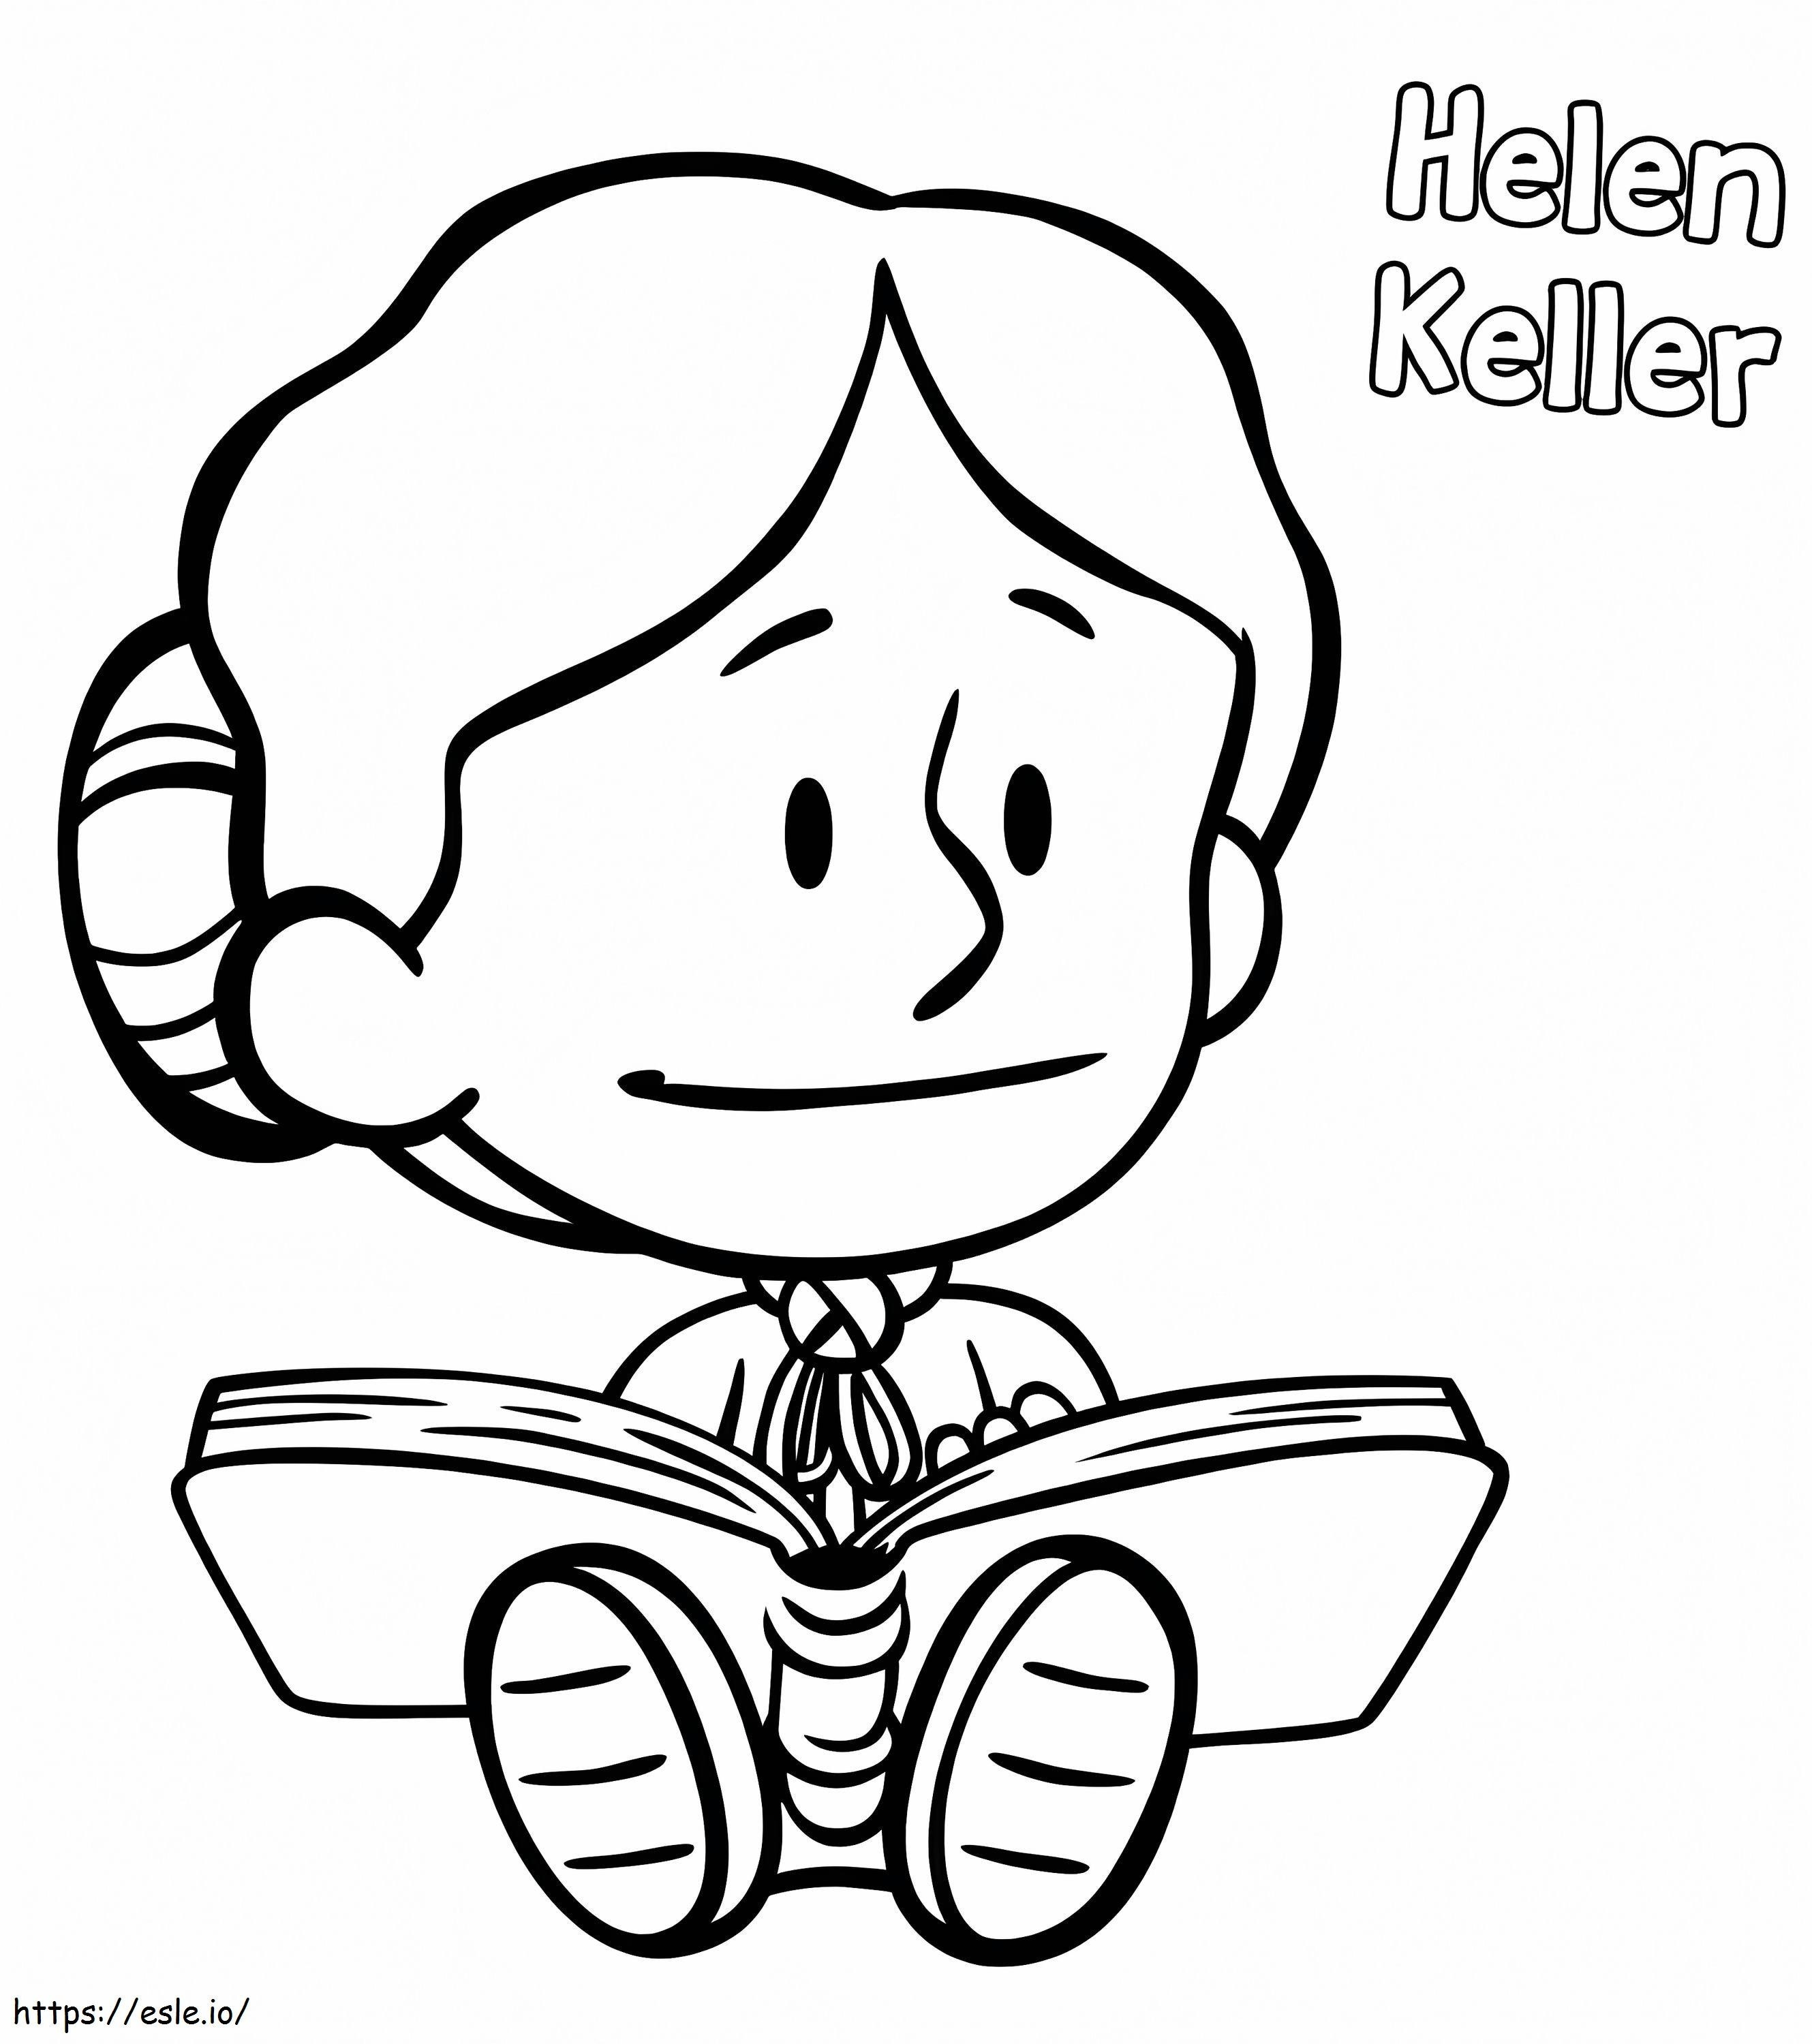 Helen Keller van Xavier Riddle kleurplaat kleurplaat